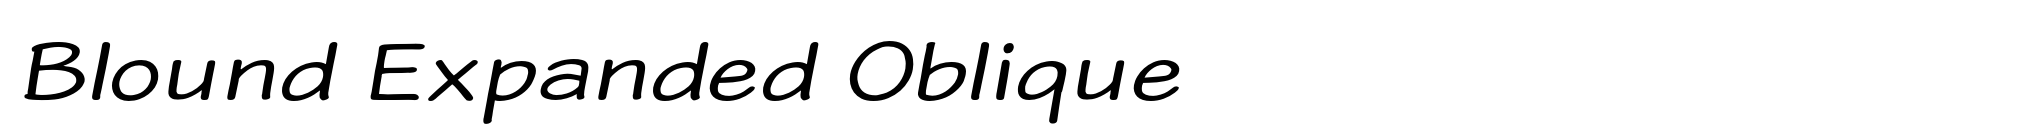 Blound Expanded Oblique image